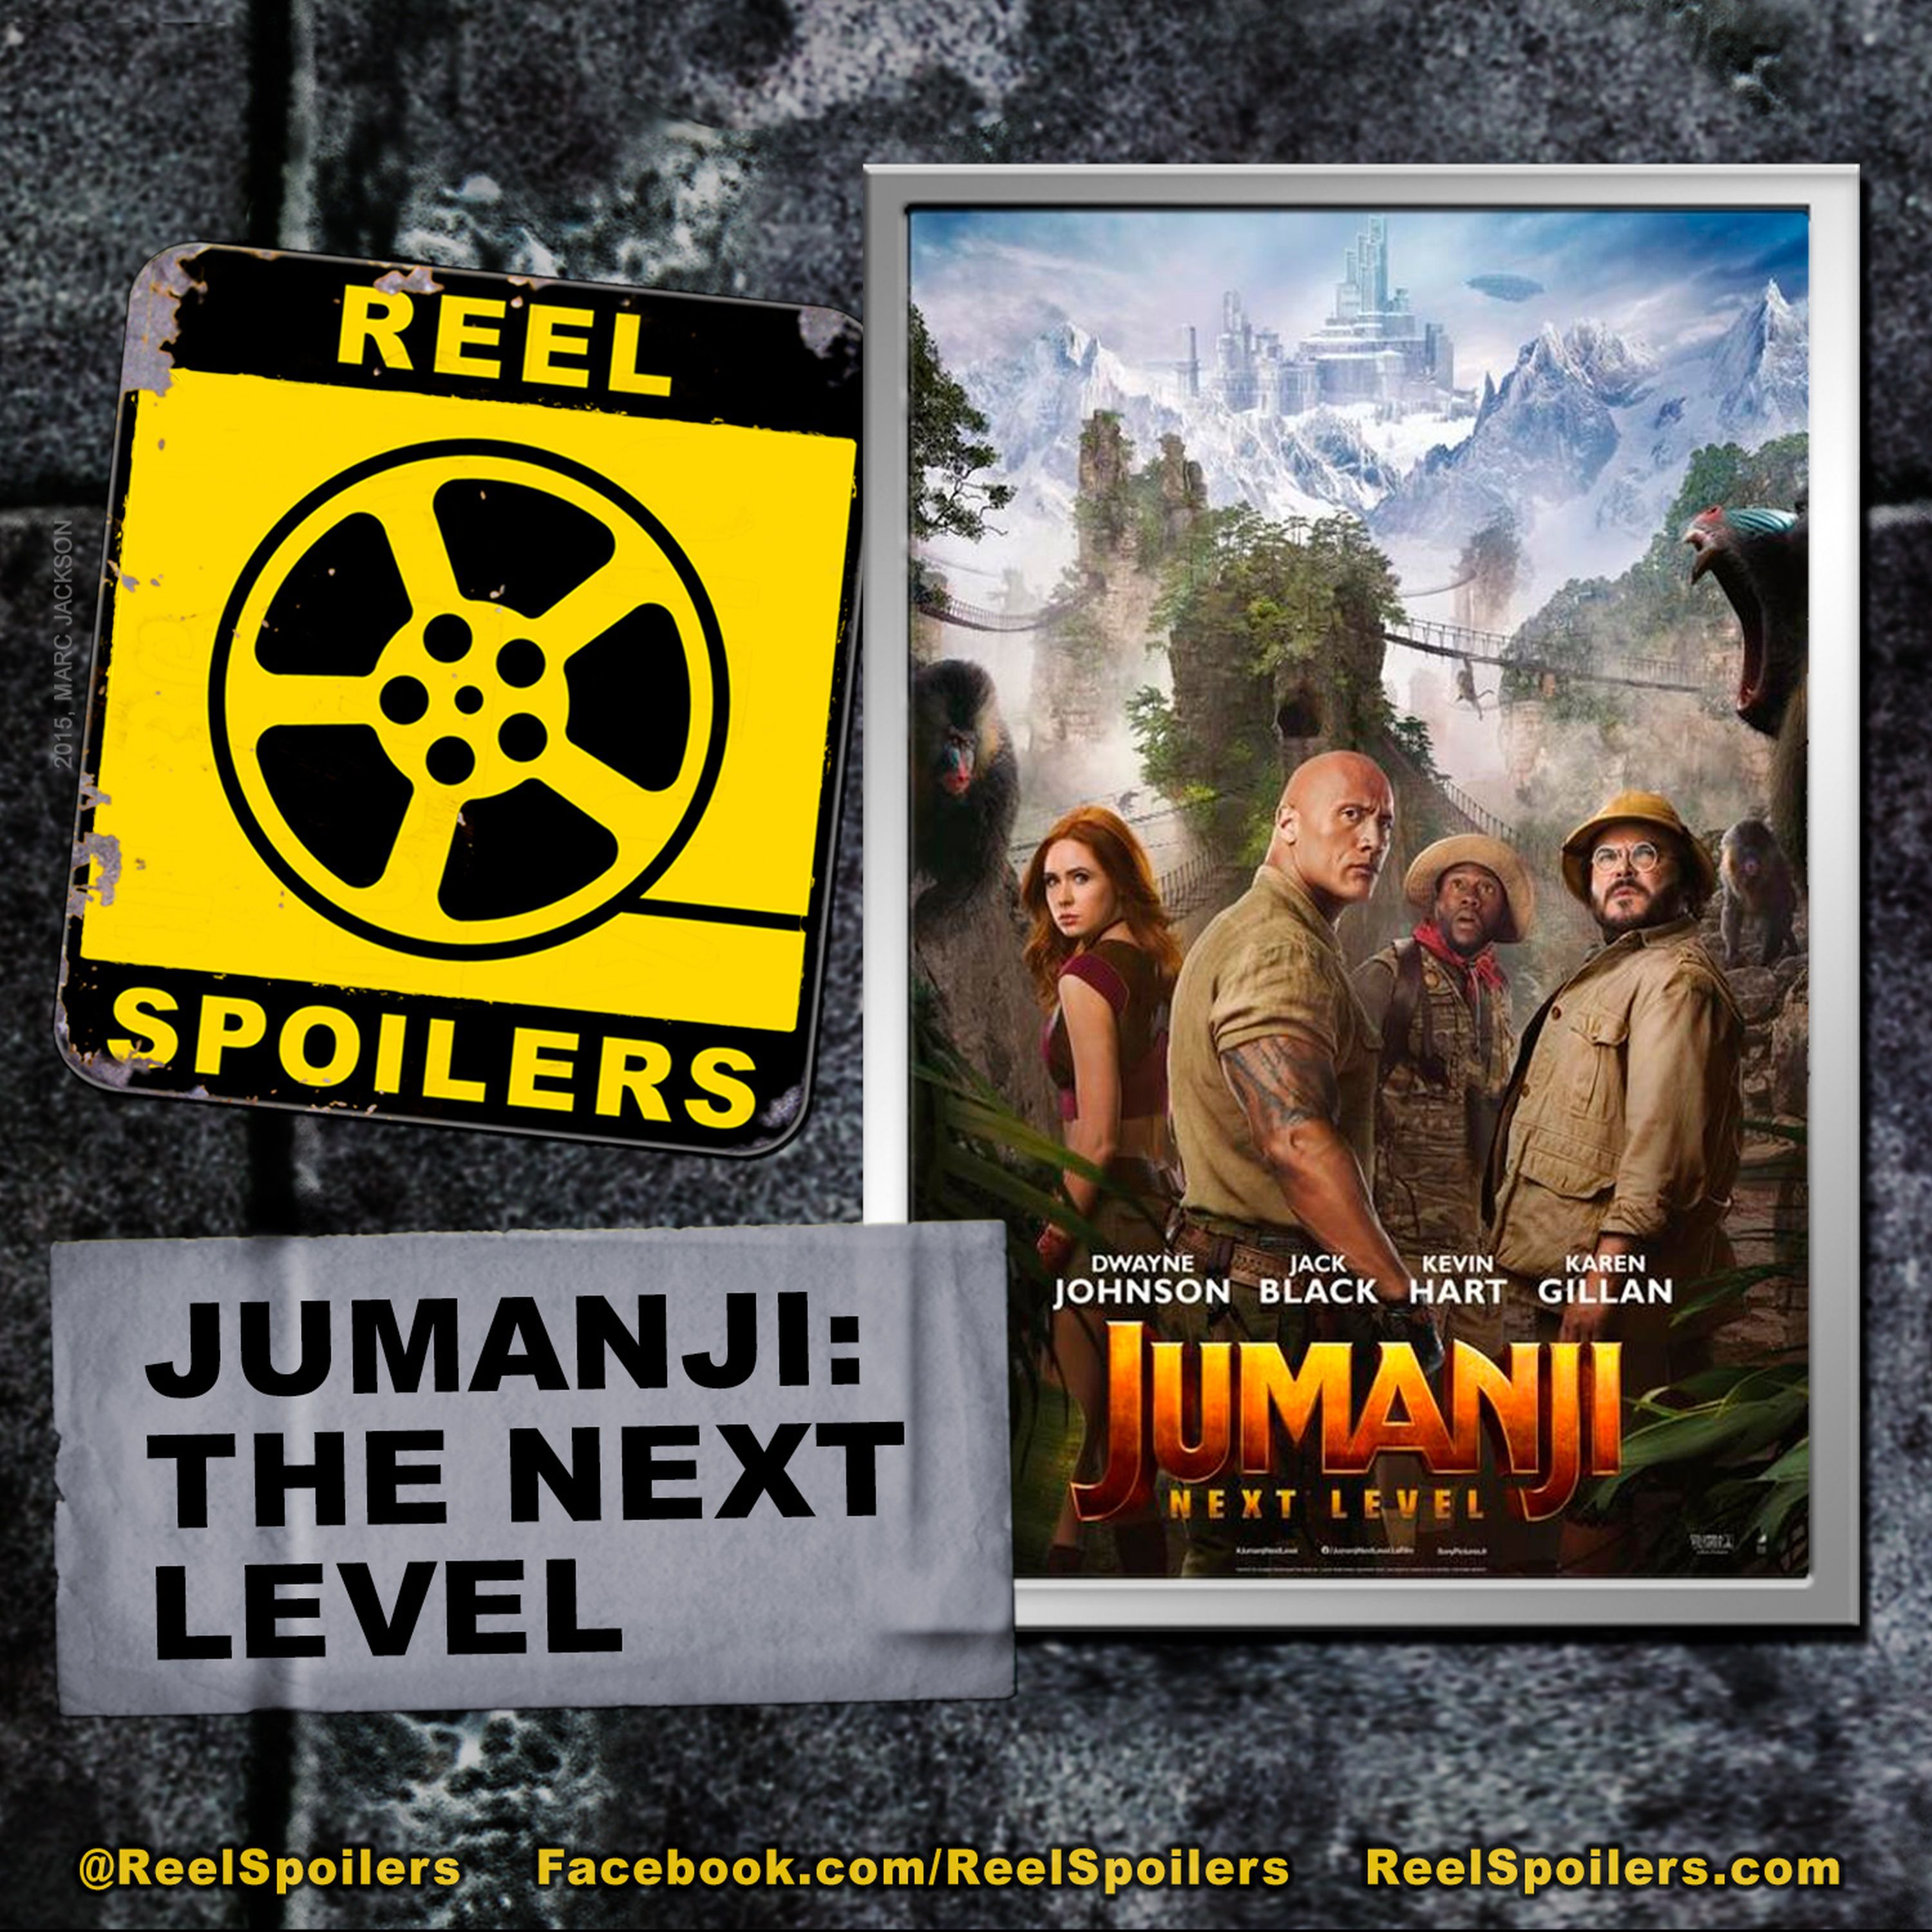 JUMANJI: THE NEXT LEVEL Starring The Rock, Karen Gillan, Kevin Hart, Jack Black Image